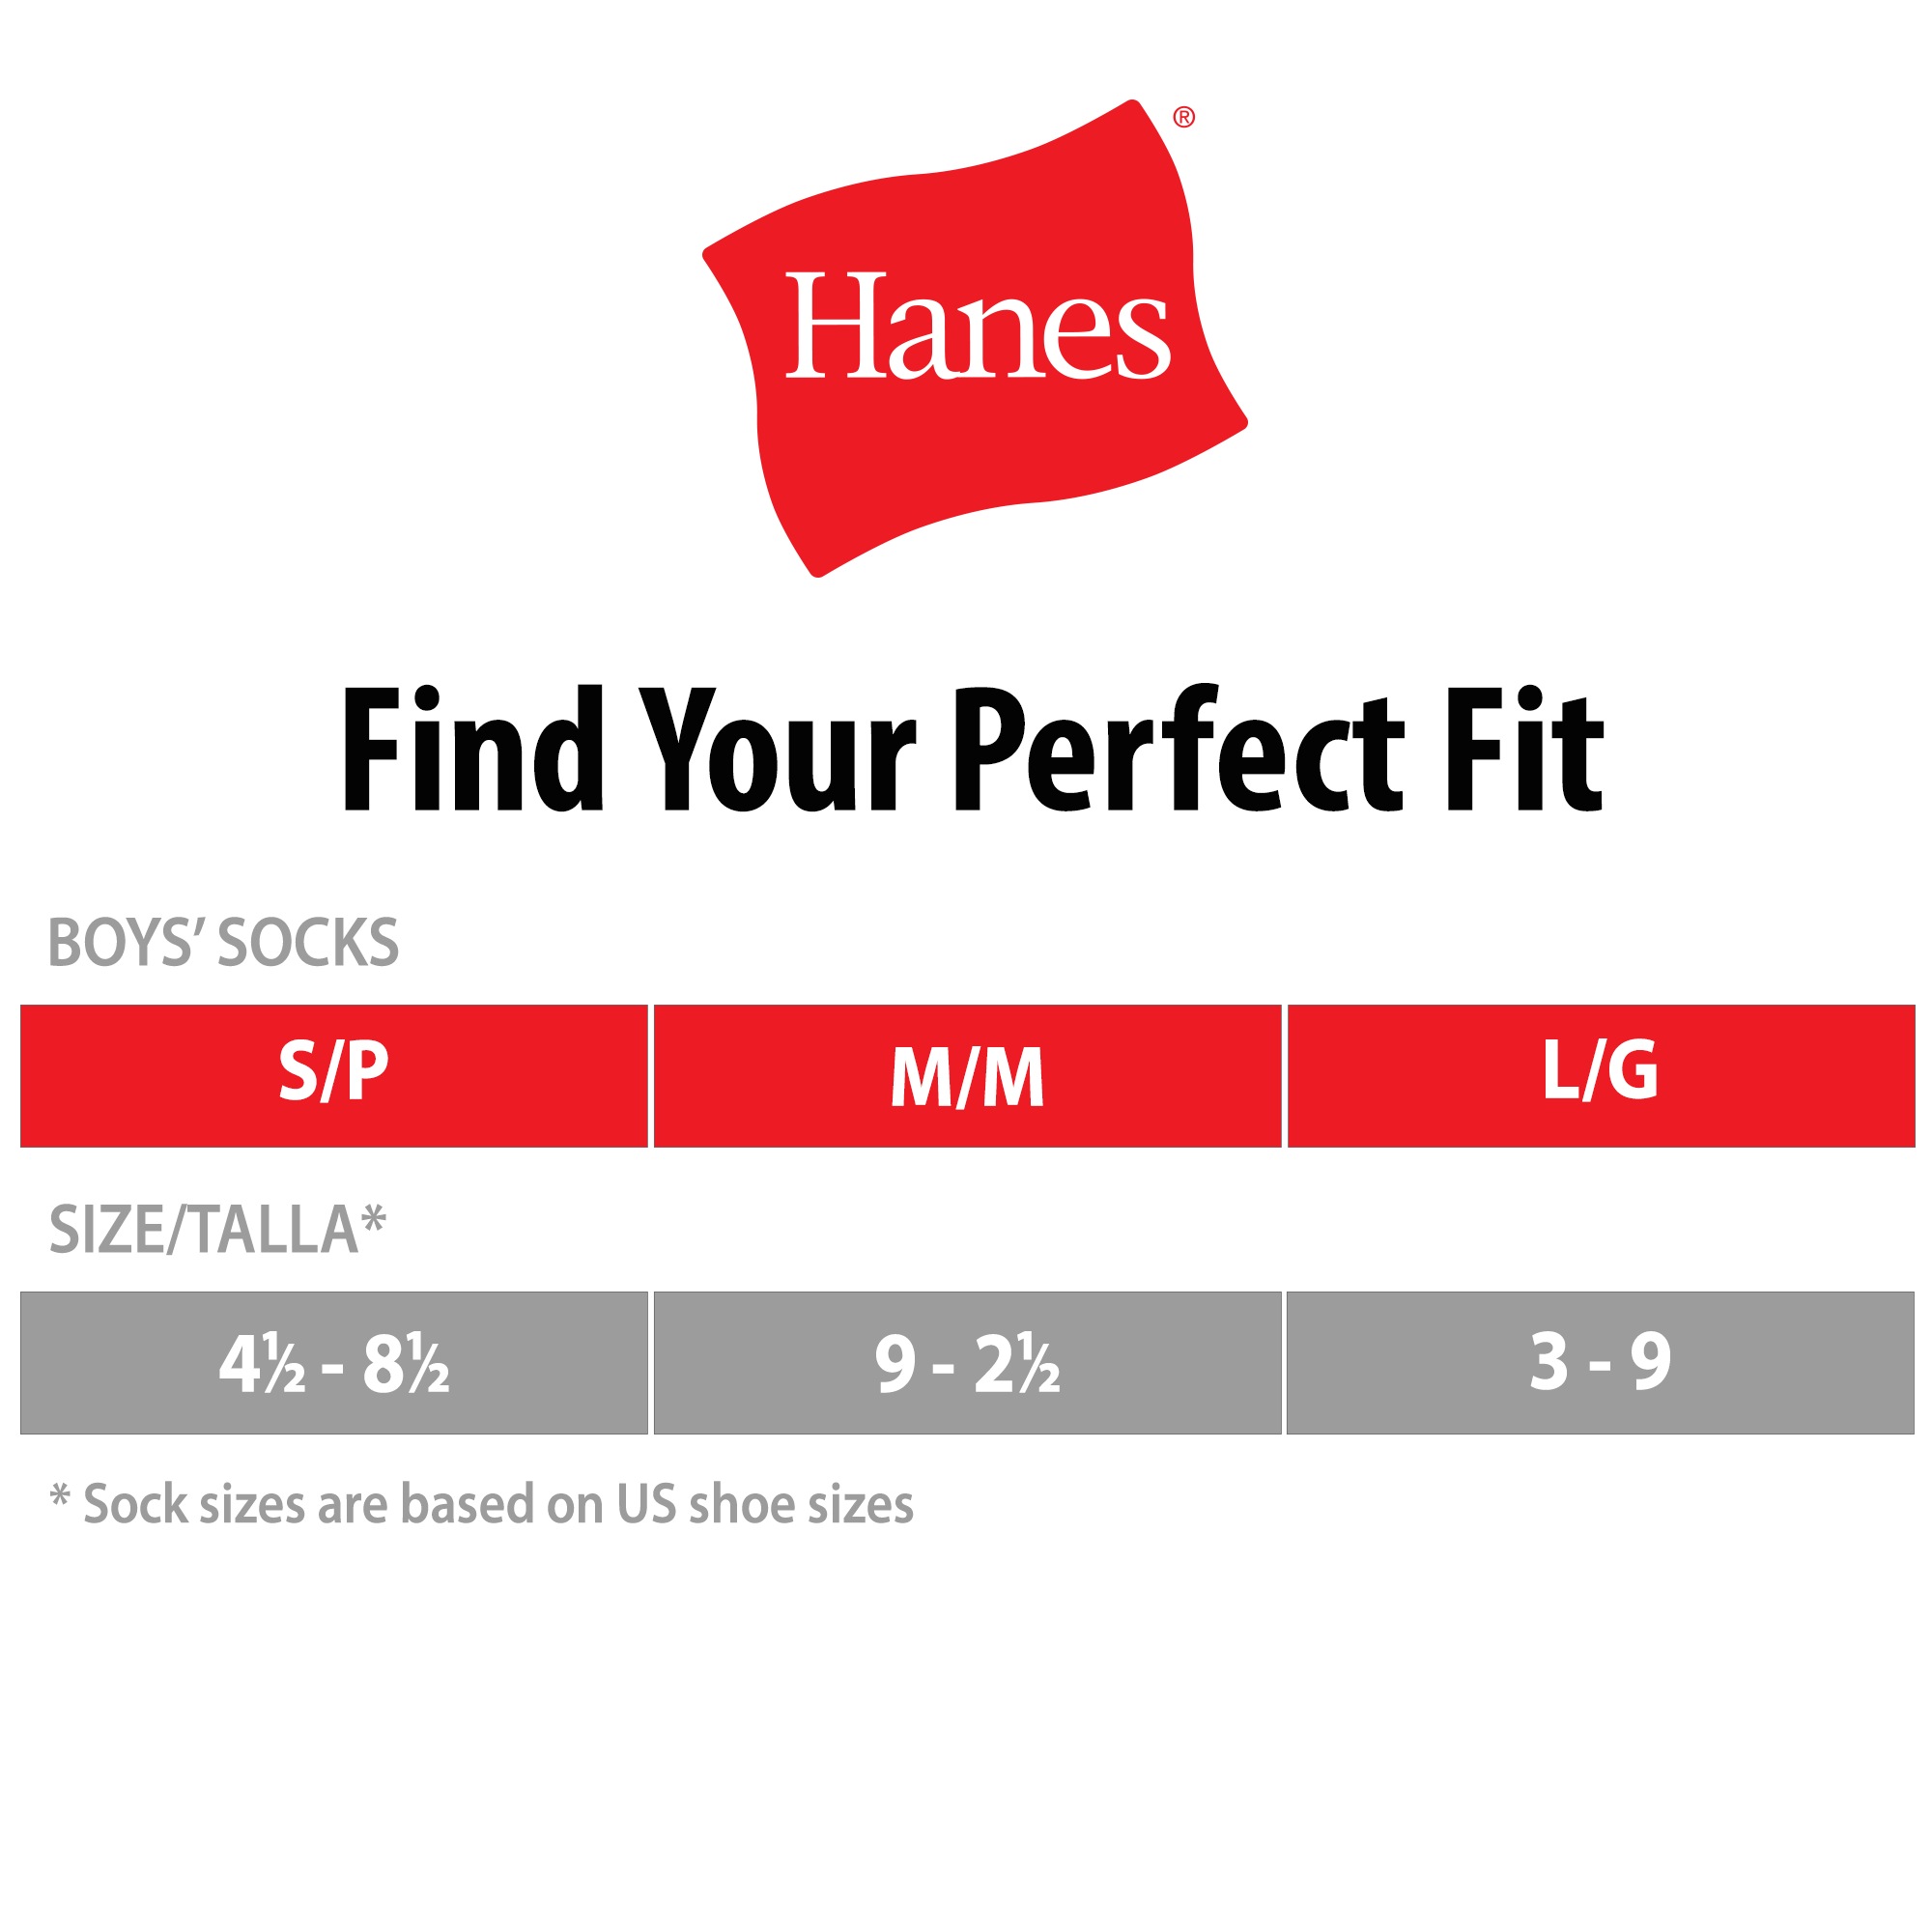 Hanes Boys' Crew Socks, 12 Pack - image 3 of 5